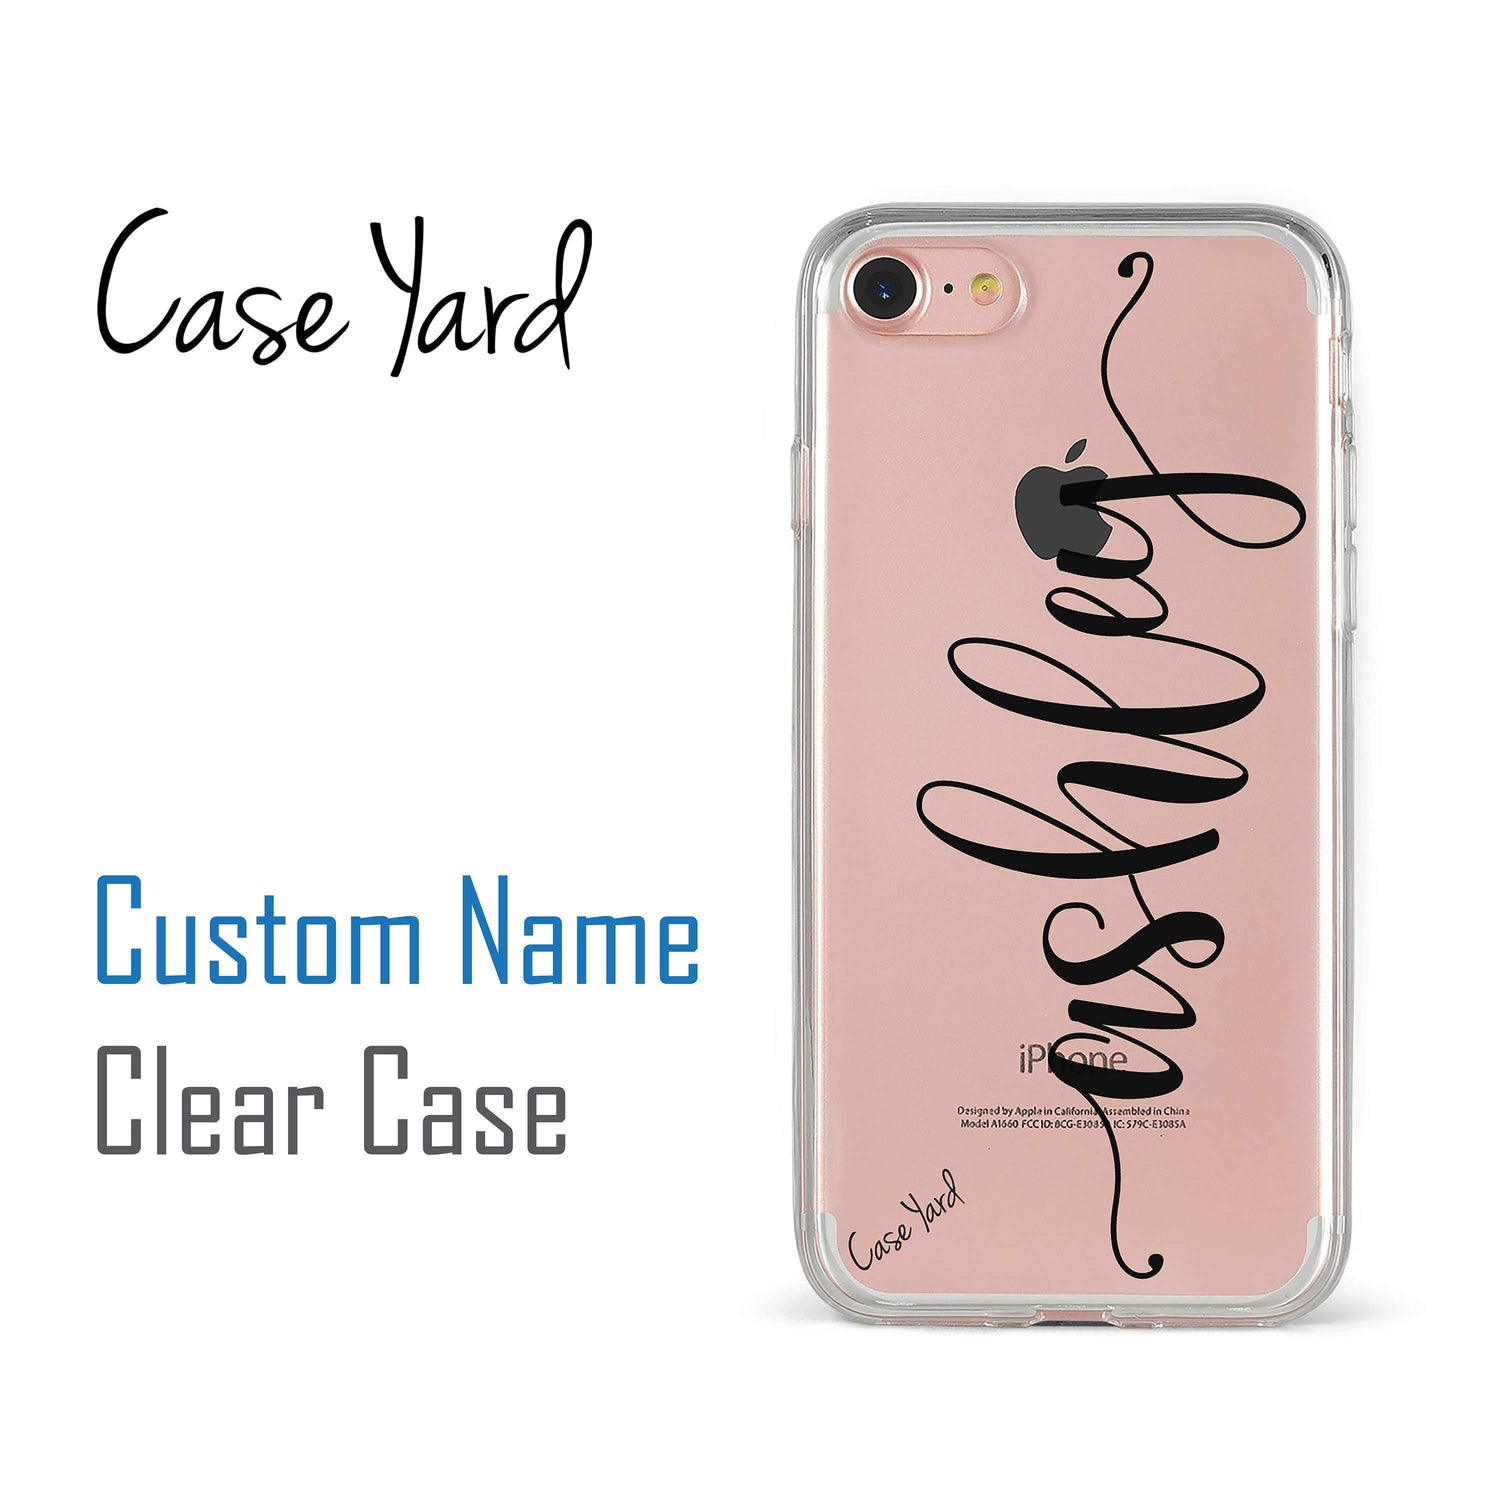 Custom Design Personalized Silicon TPU Case, Perfect Gift - Case Yard USA